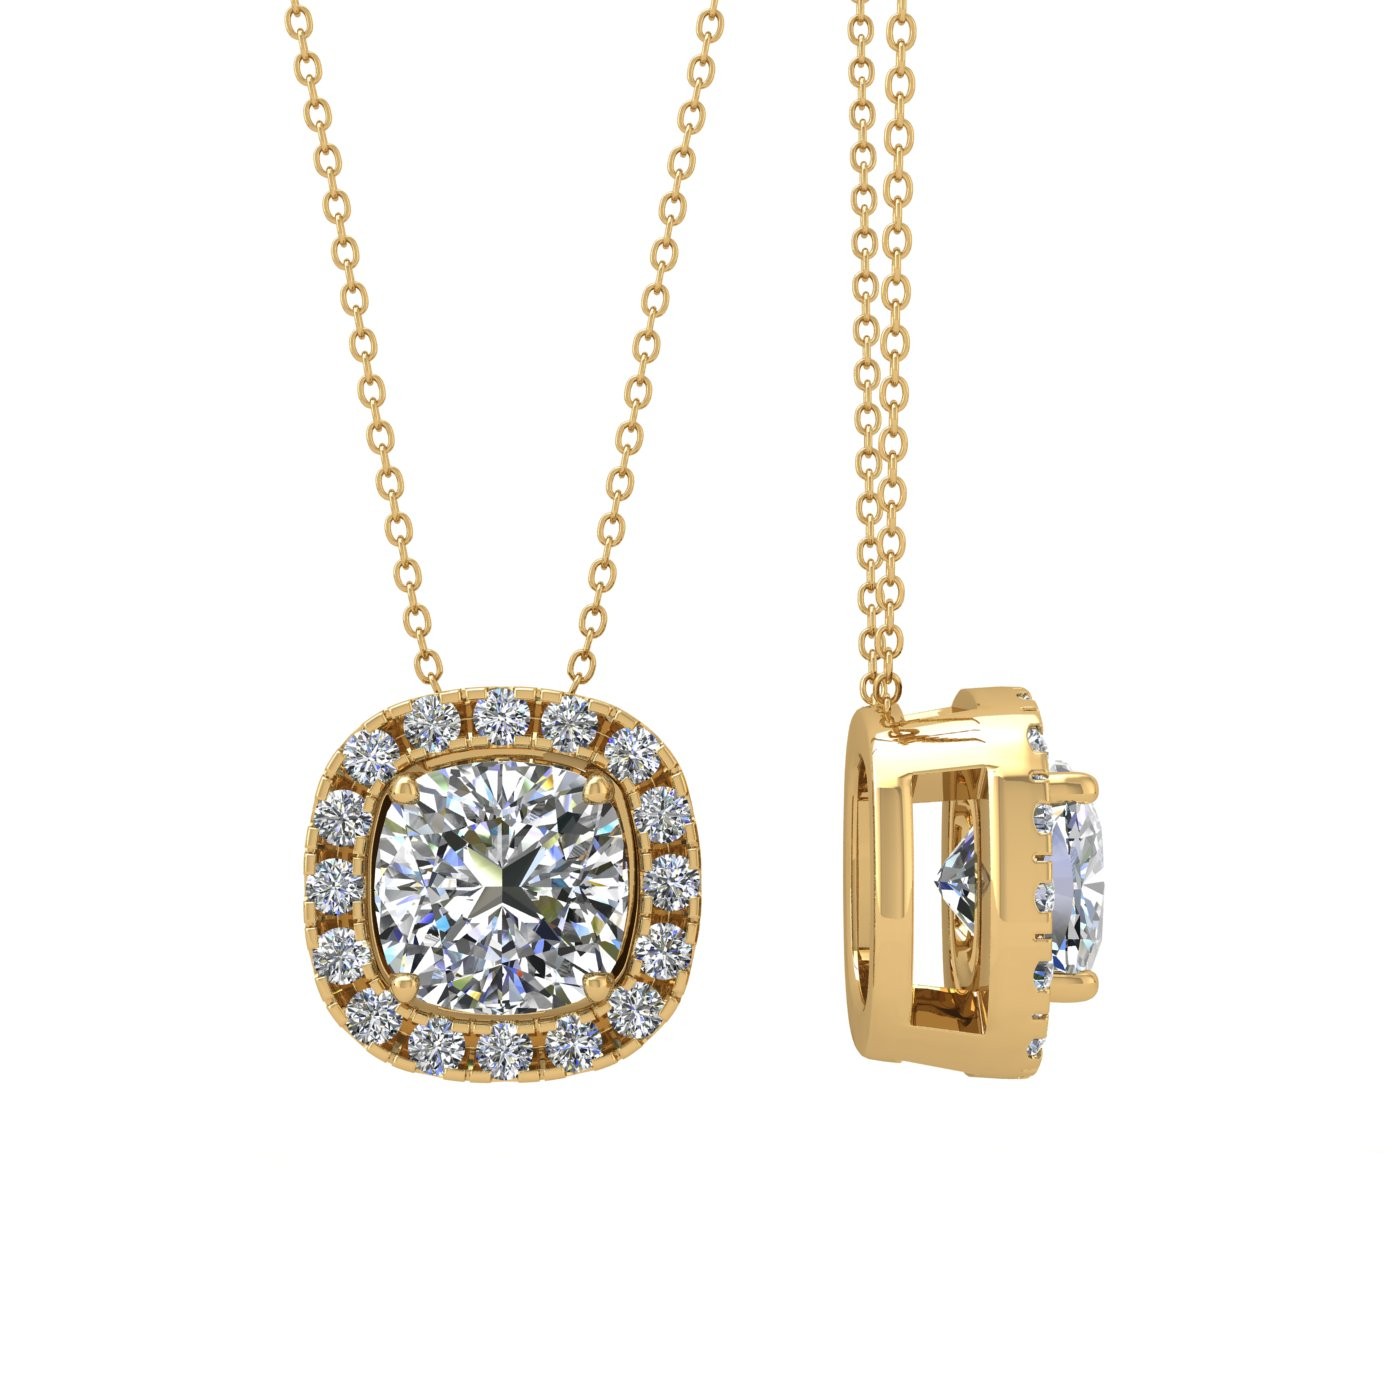 18k yellow gold  1,2 ct 4 prongs cushion shape diamond pendant with diamond pavÉ set halo